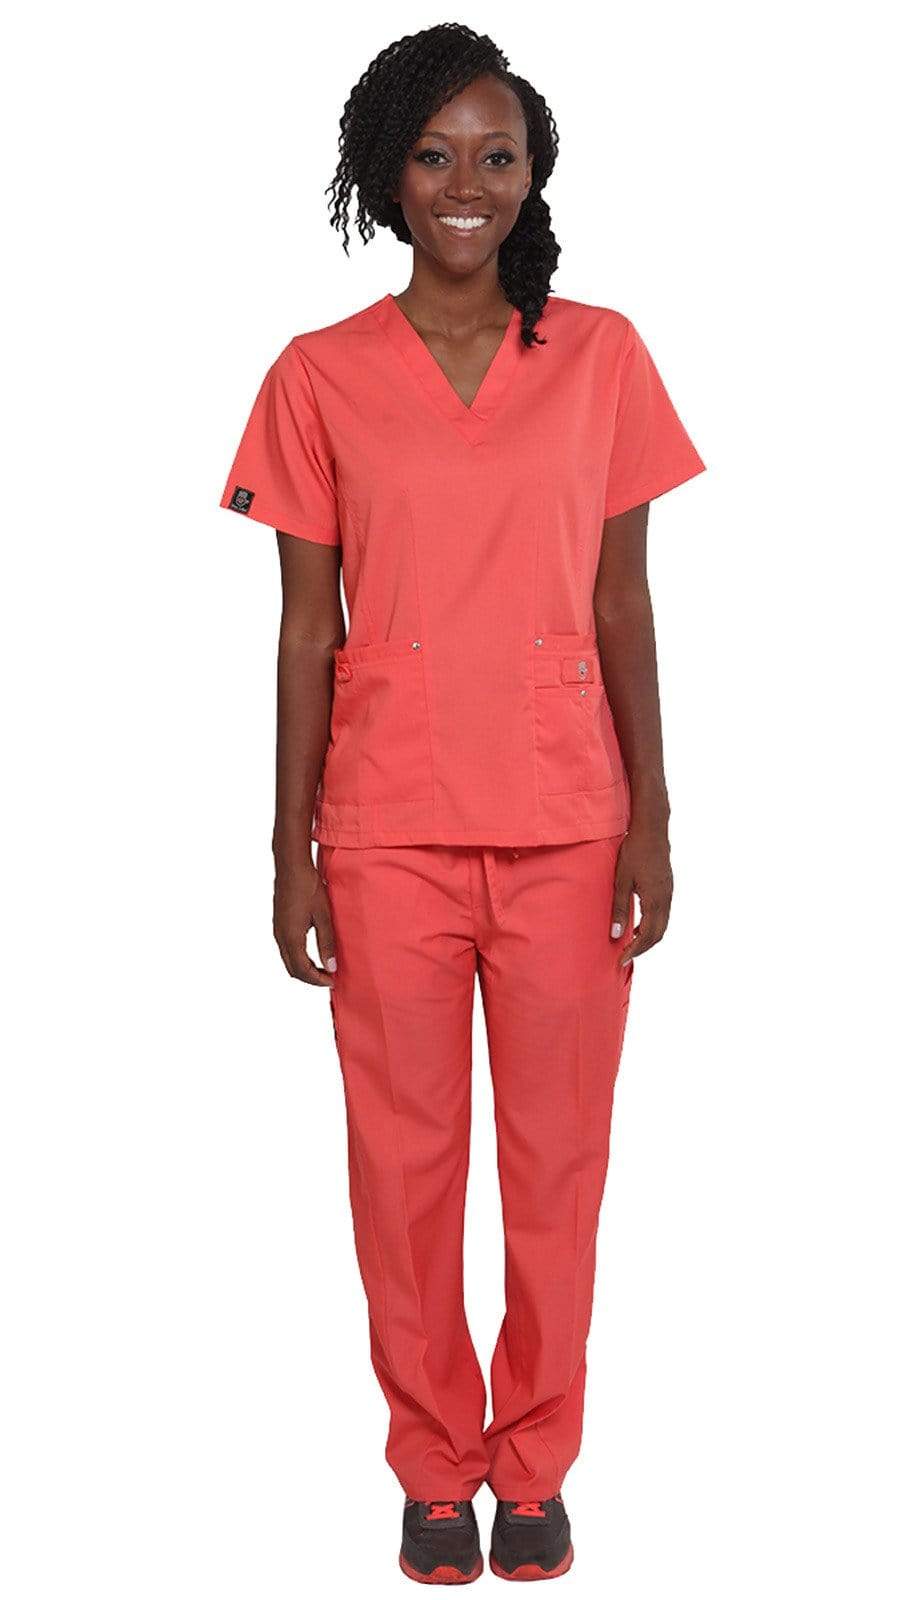 Dress A Med Women's 11 Pocket Slim Fit Uniform Scrubs